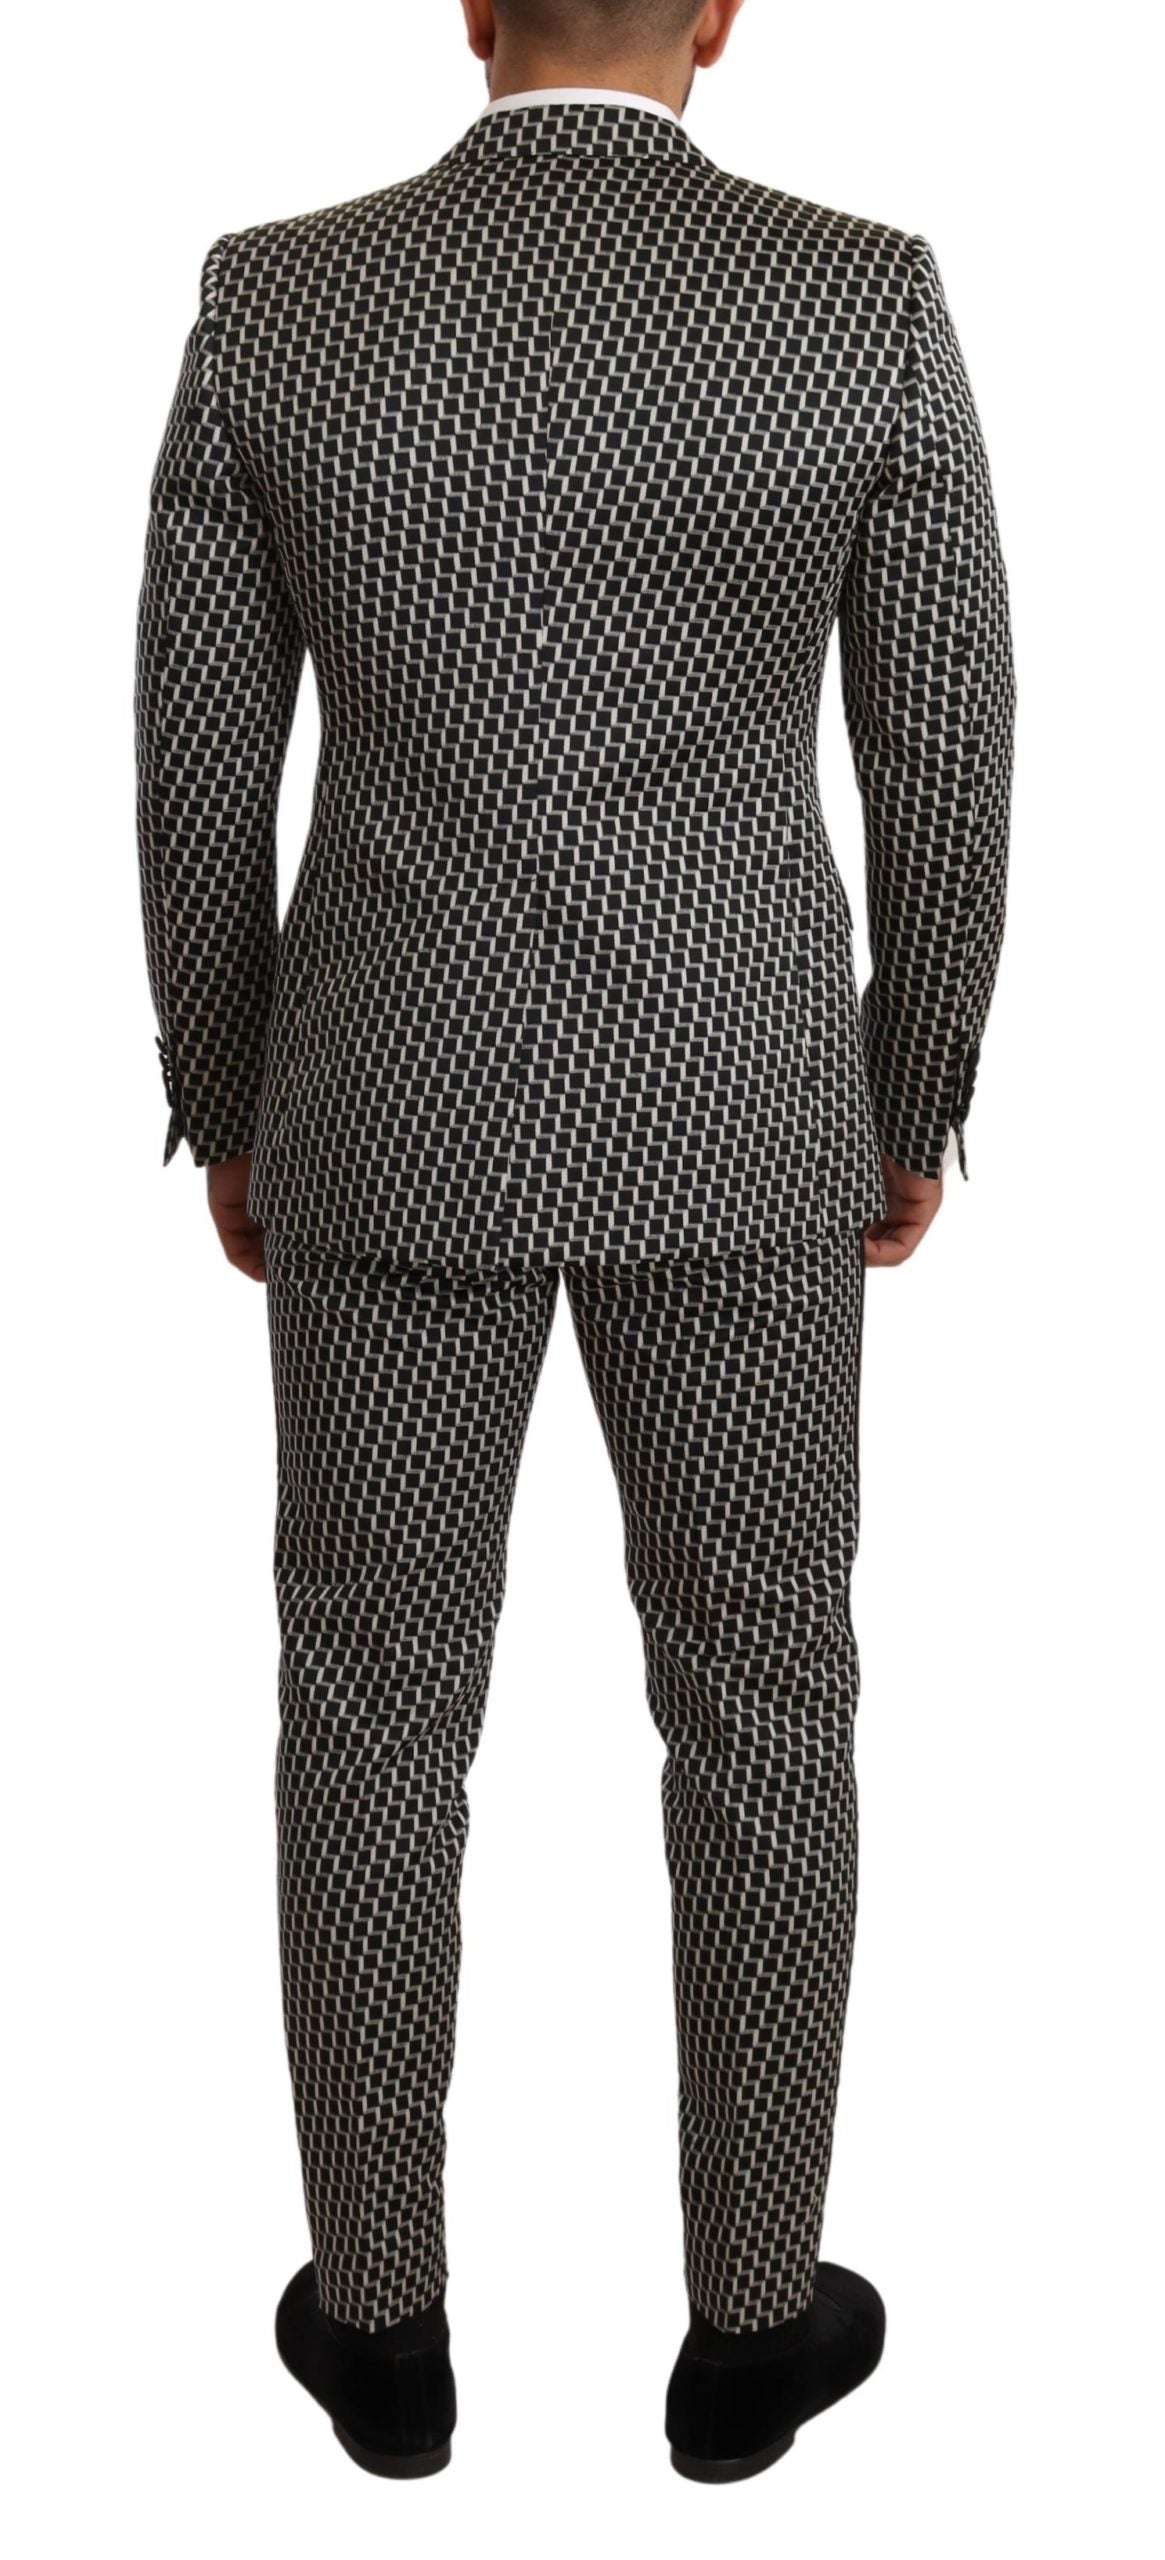 Black White Check 3 Piece Set MARTINI Suit